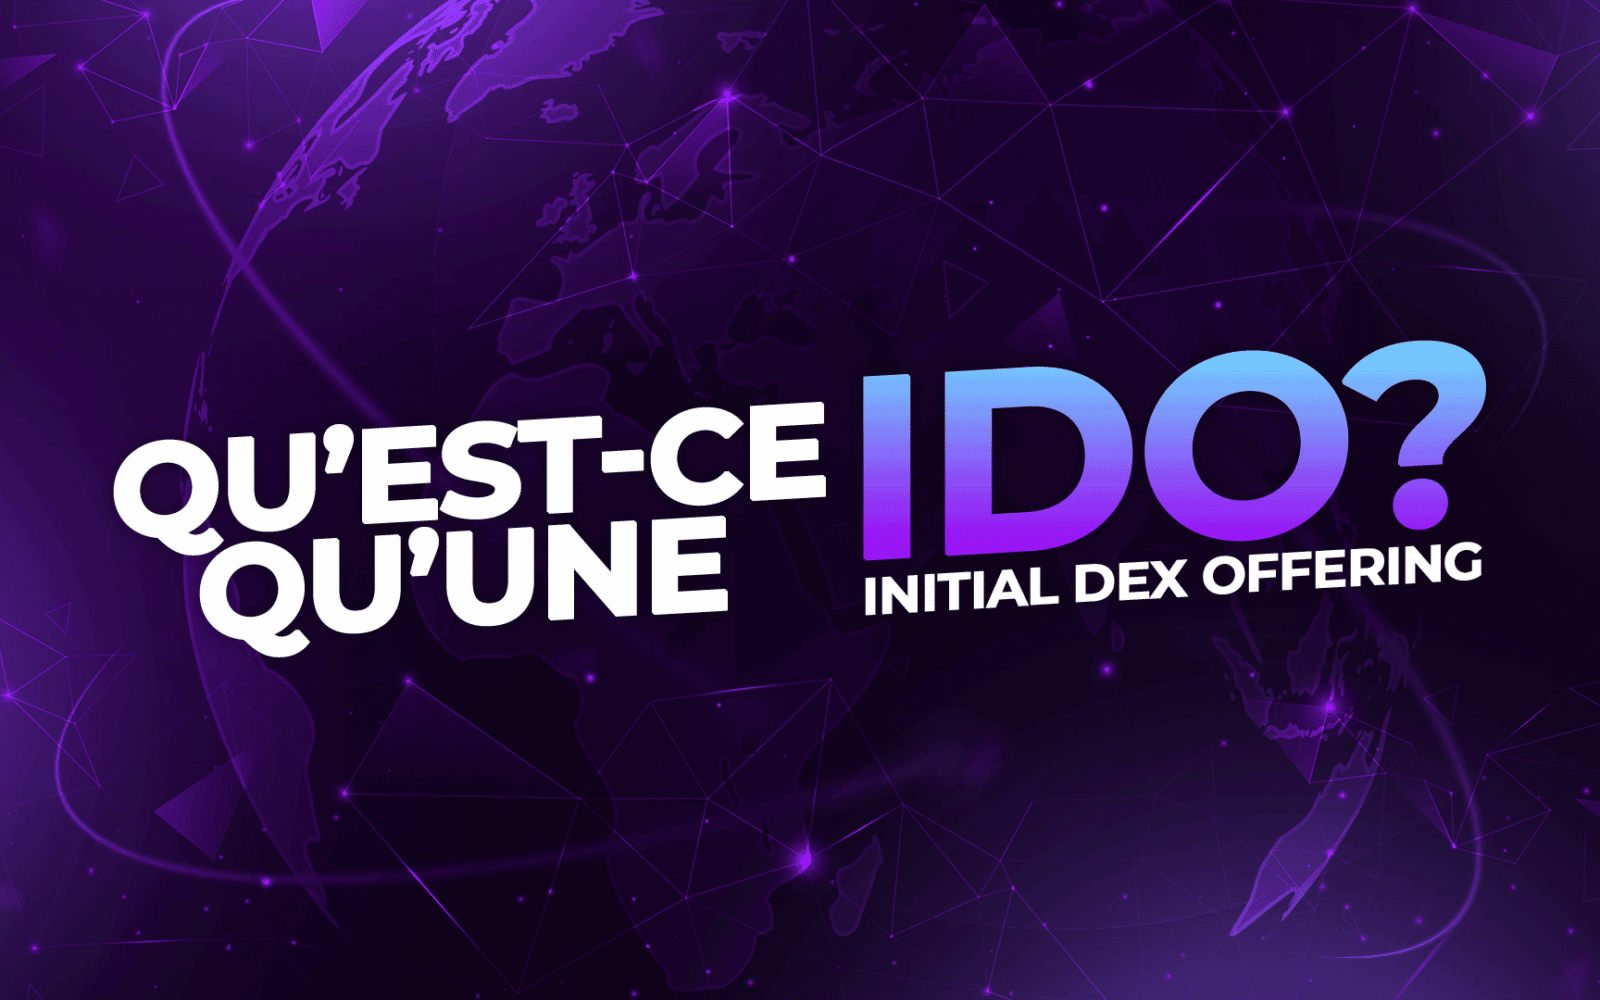 ido initial dex offering